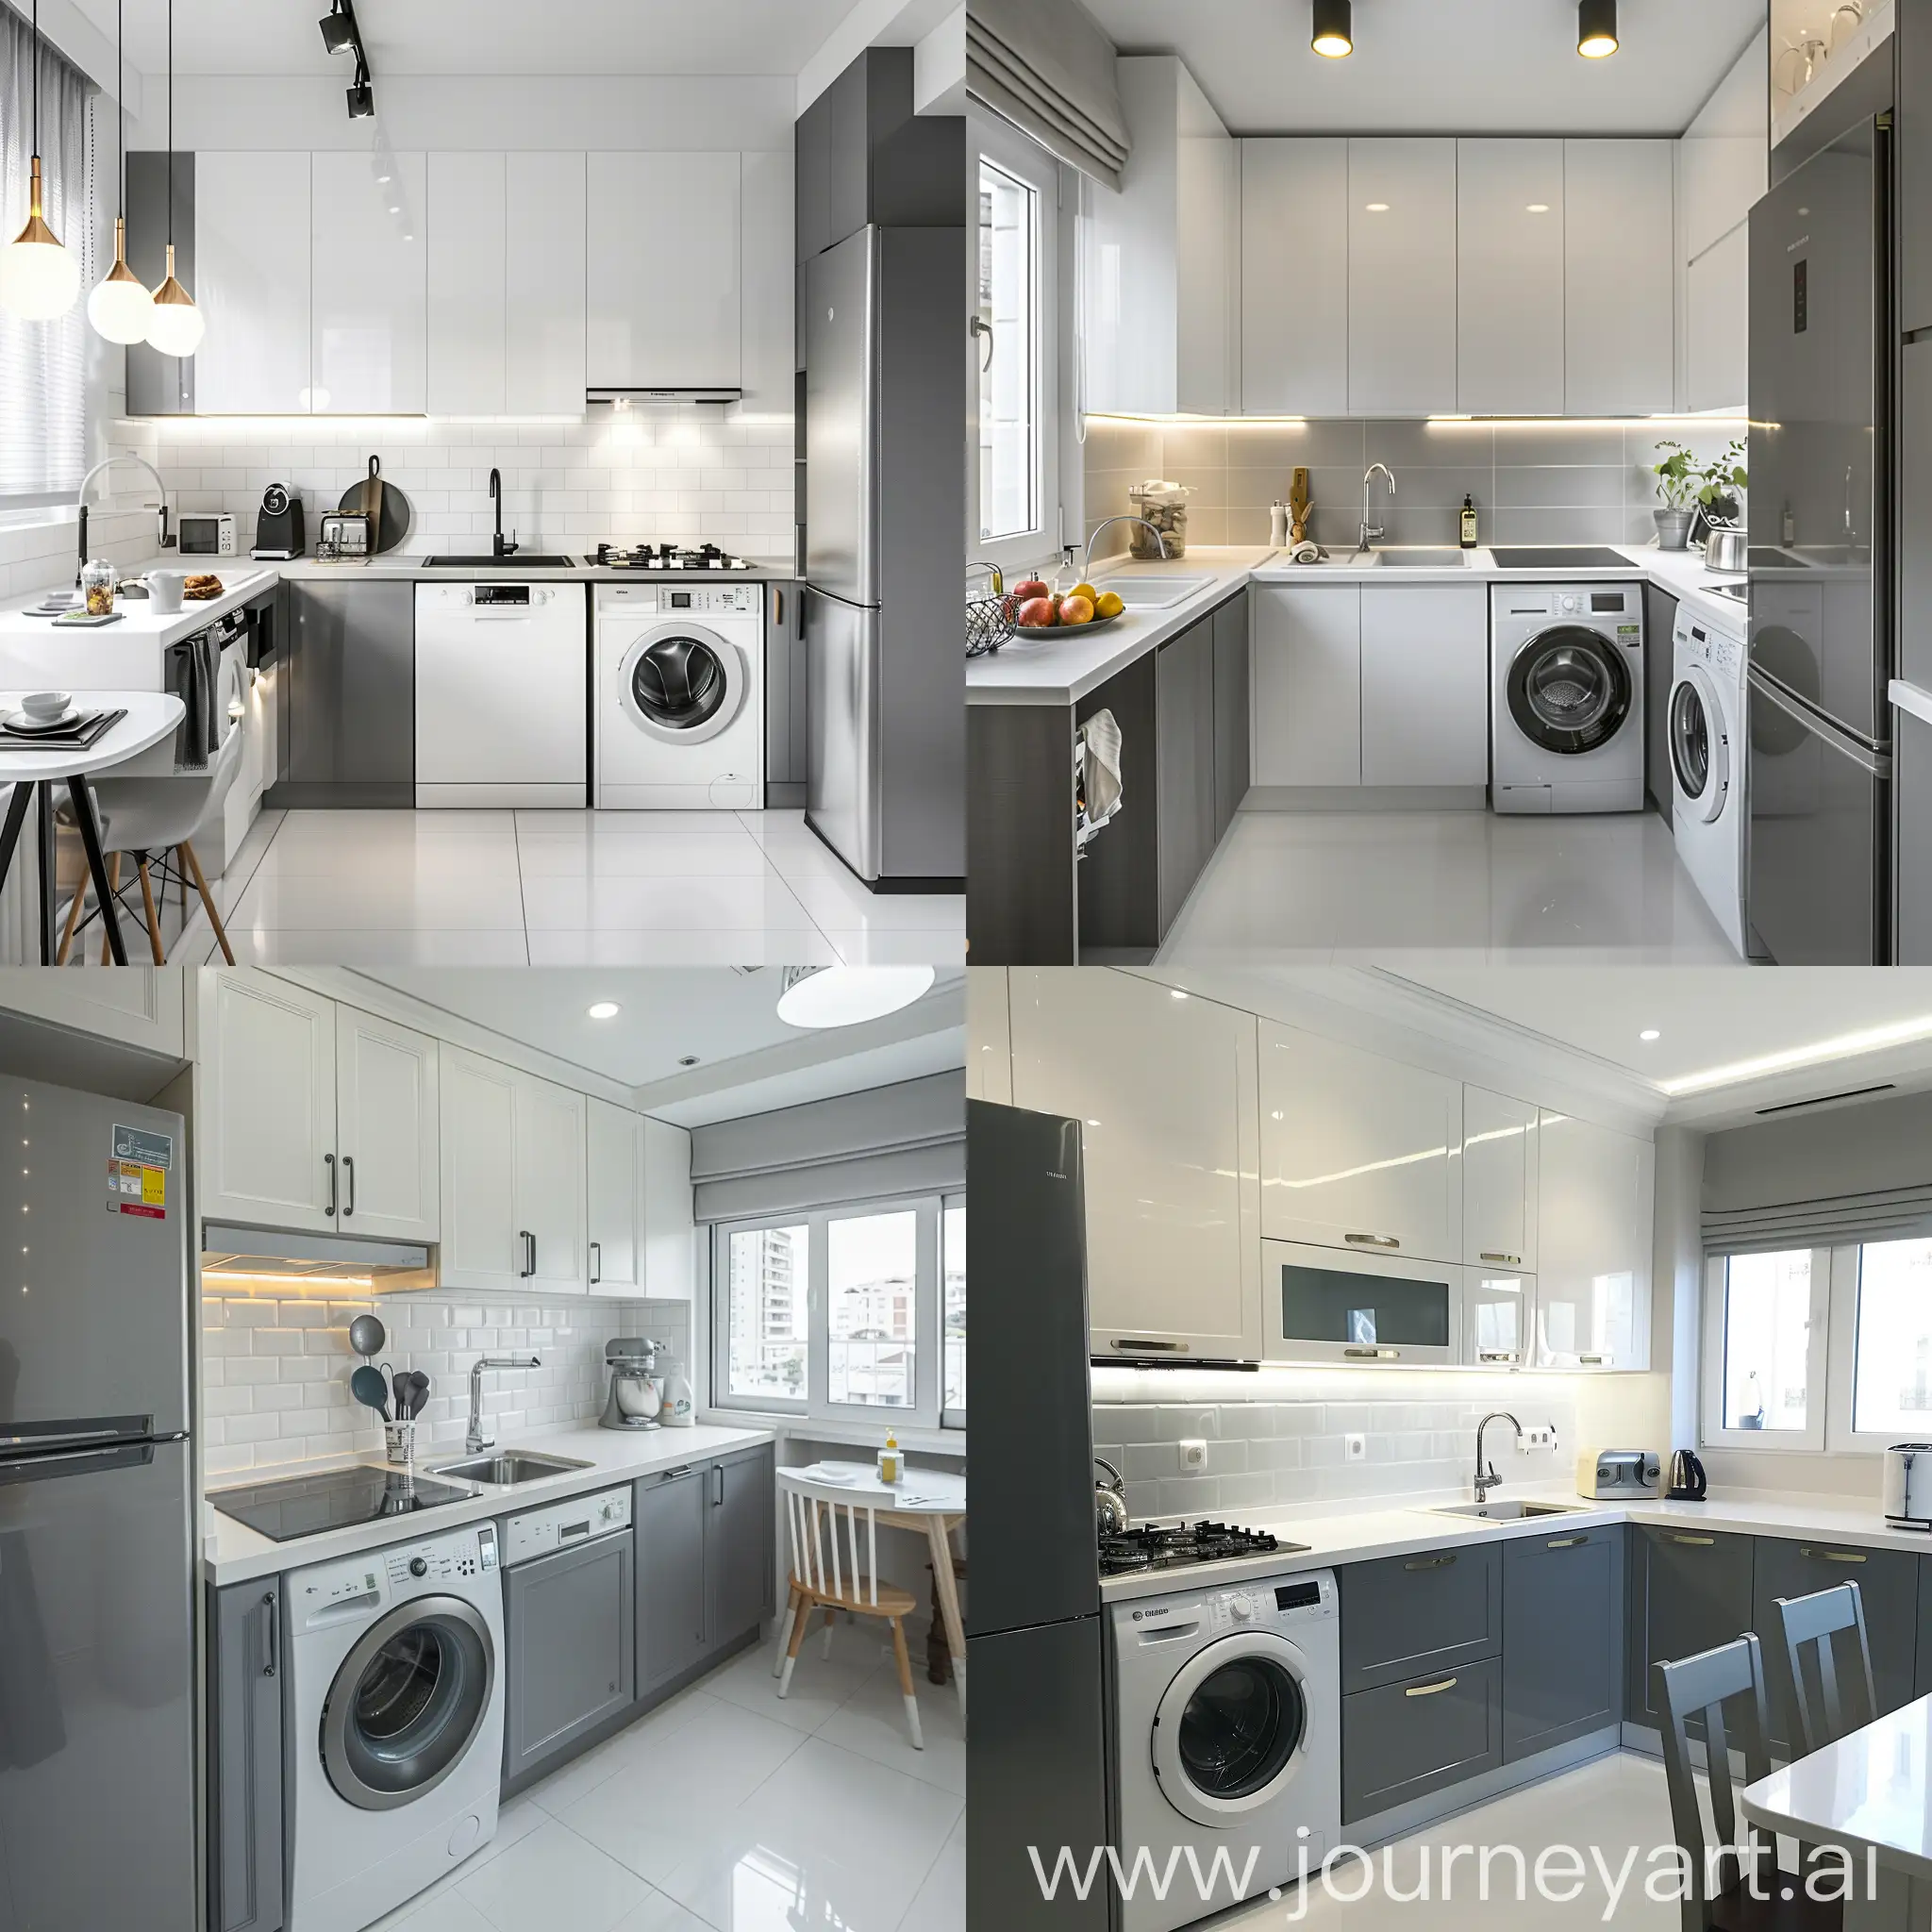 classic kitchen in white and gray.  sink, washing machine, dishwasher, refrigerator, table gas, white floor,No windows, internal lighting
